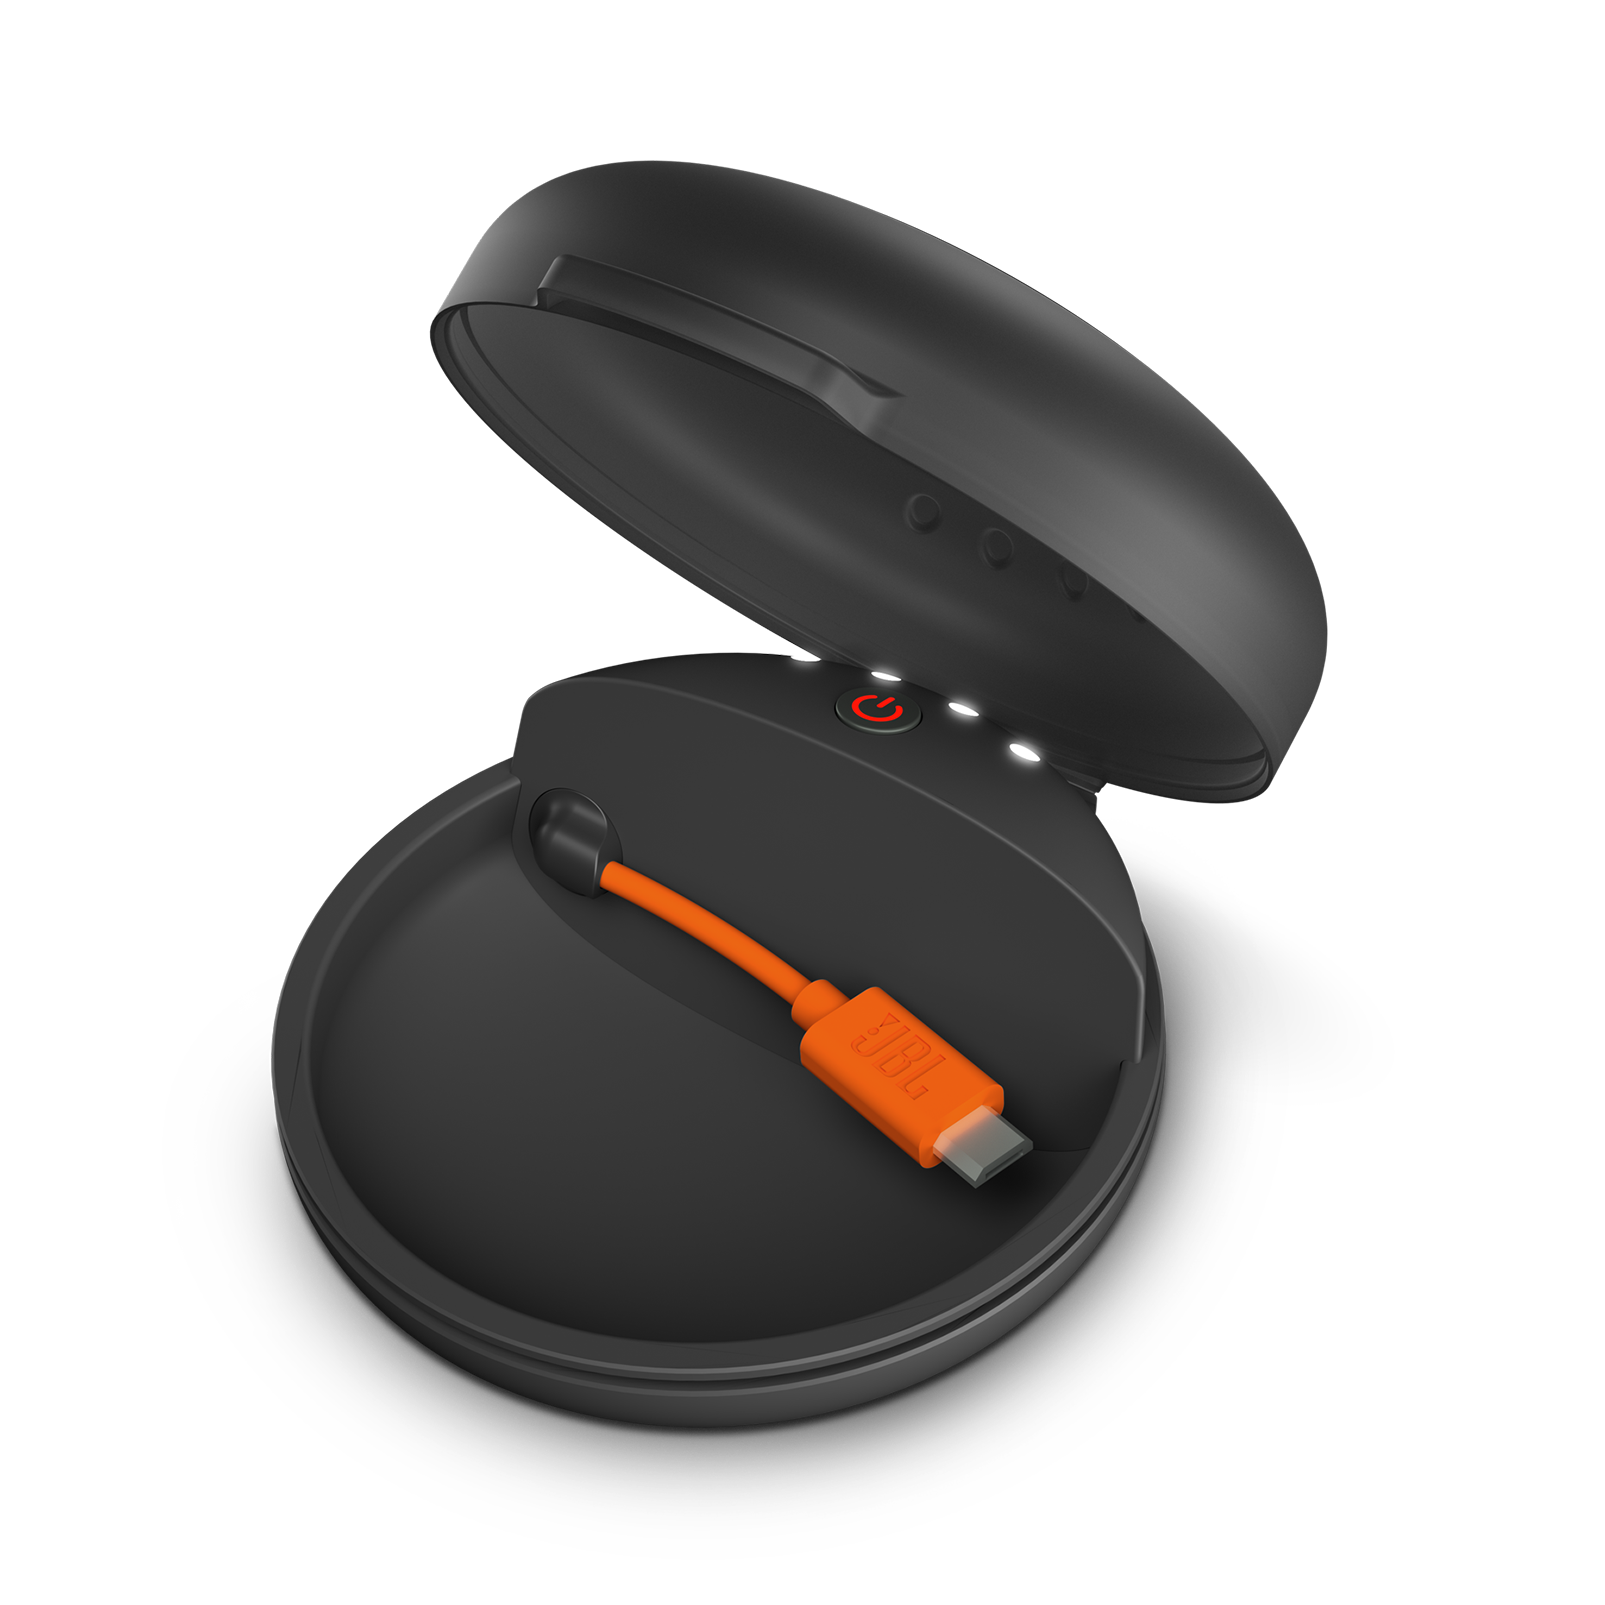 JBL Focus 700 for Women - Aqua - In-Ear Wireless Sport Headphones with charging case - Detailshot 3